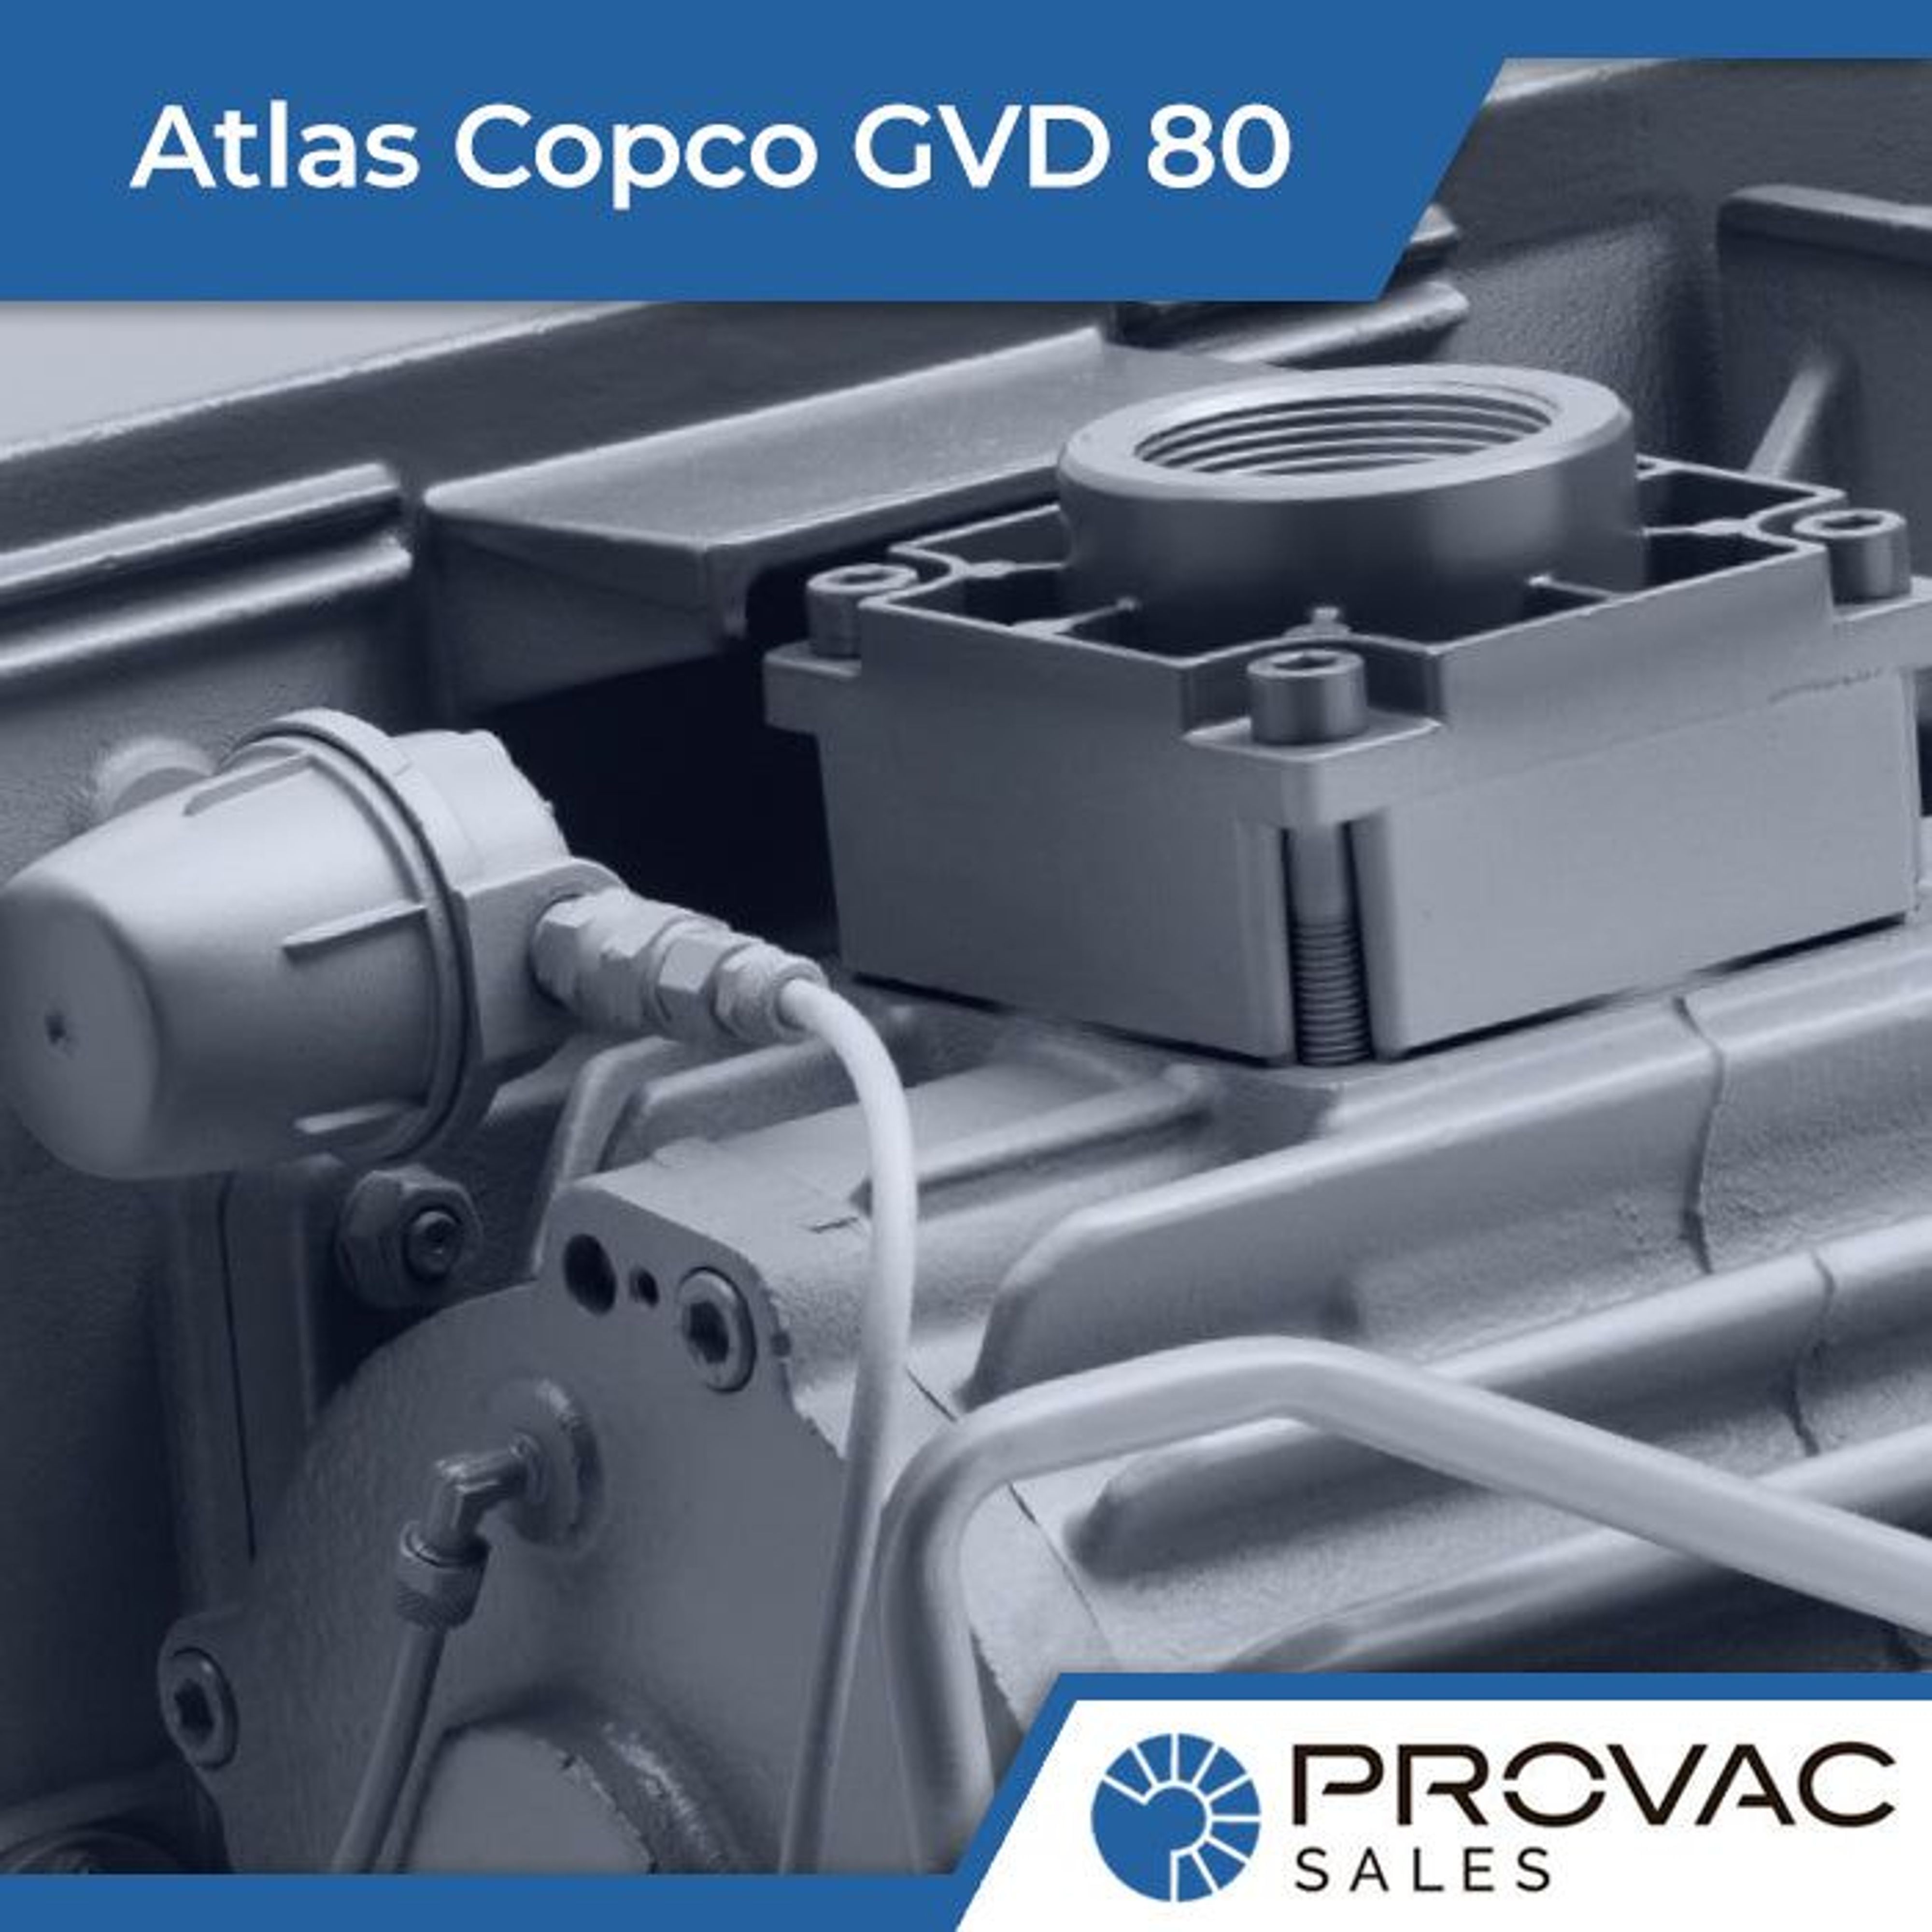 On Sale Now: Atlas Copco GVD 80 Rotary Vane Pump Background